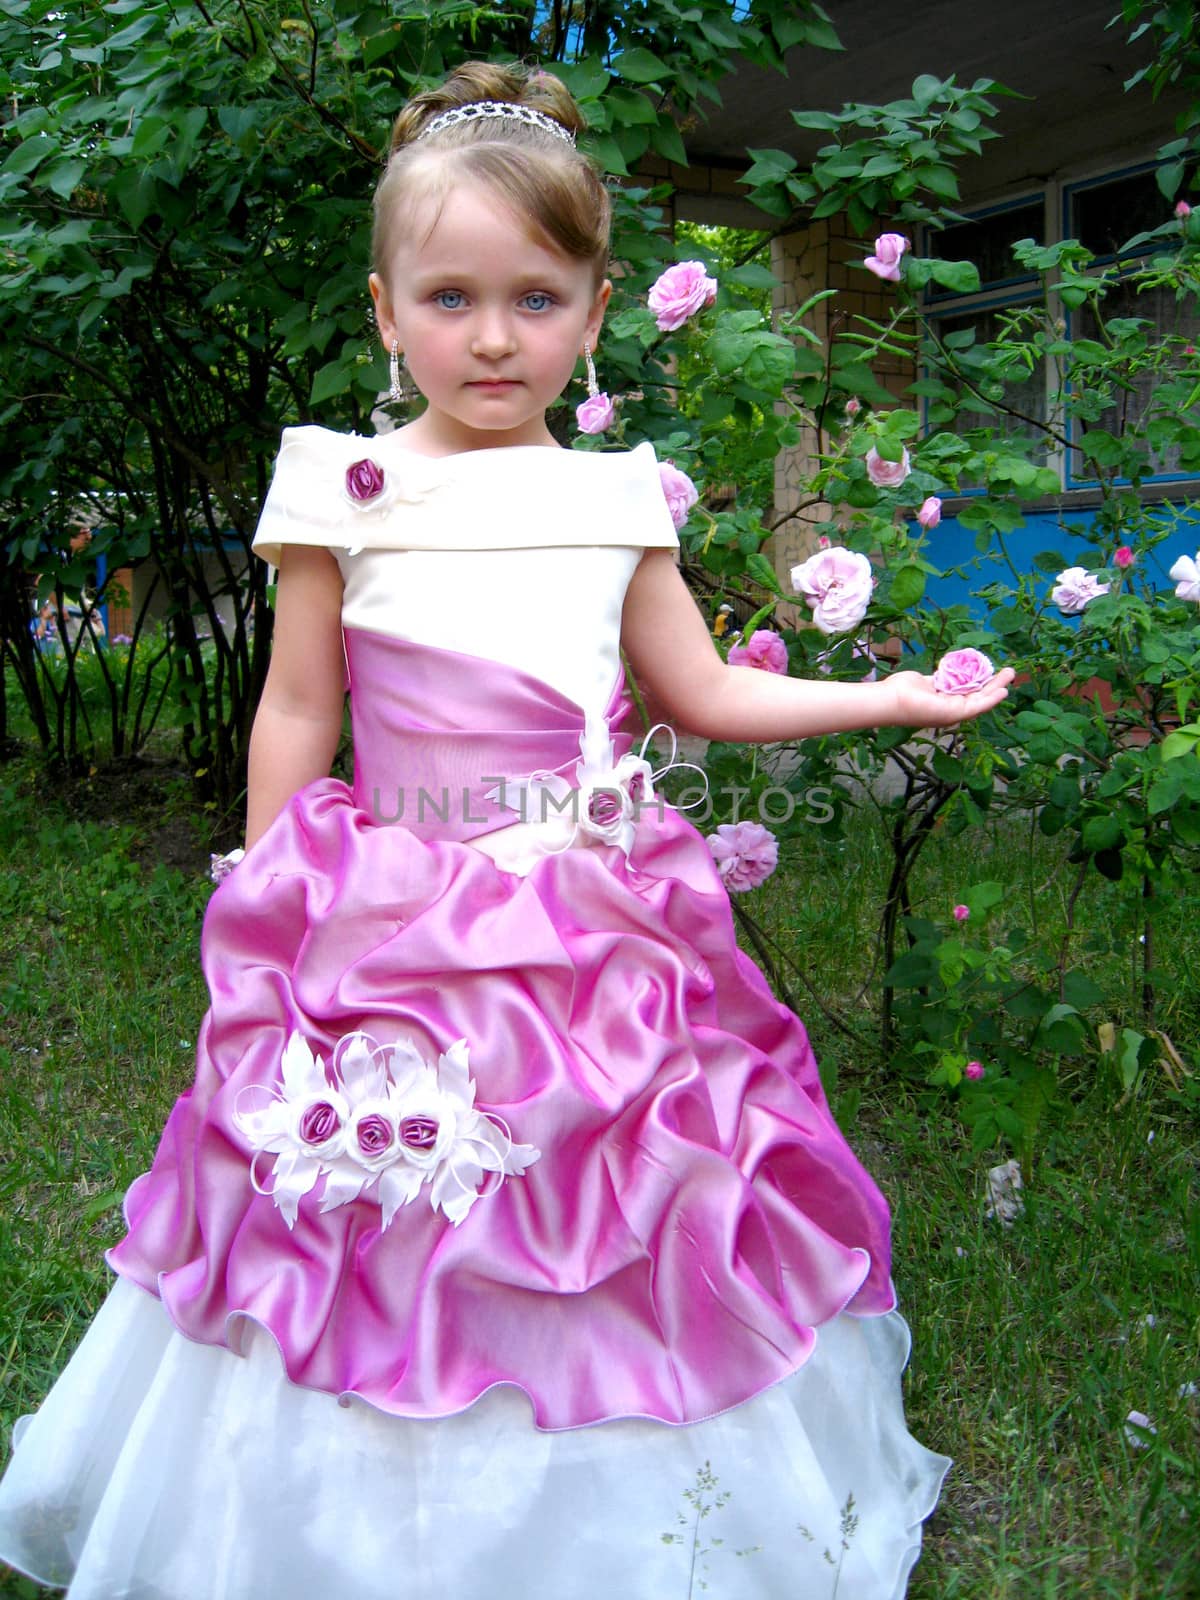 little sympathetic girl - princess by alexmak